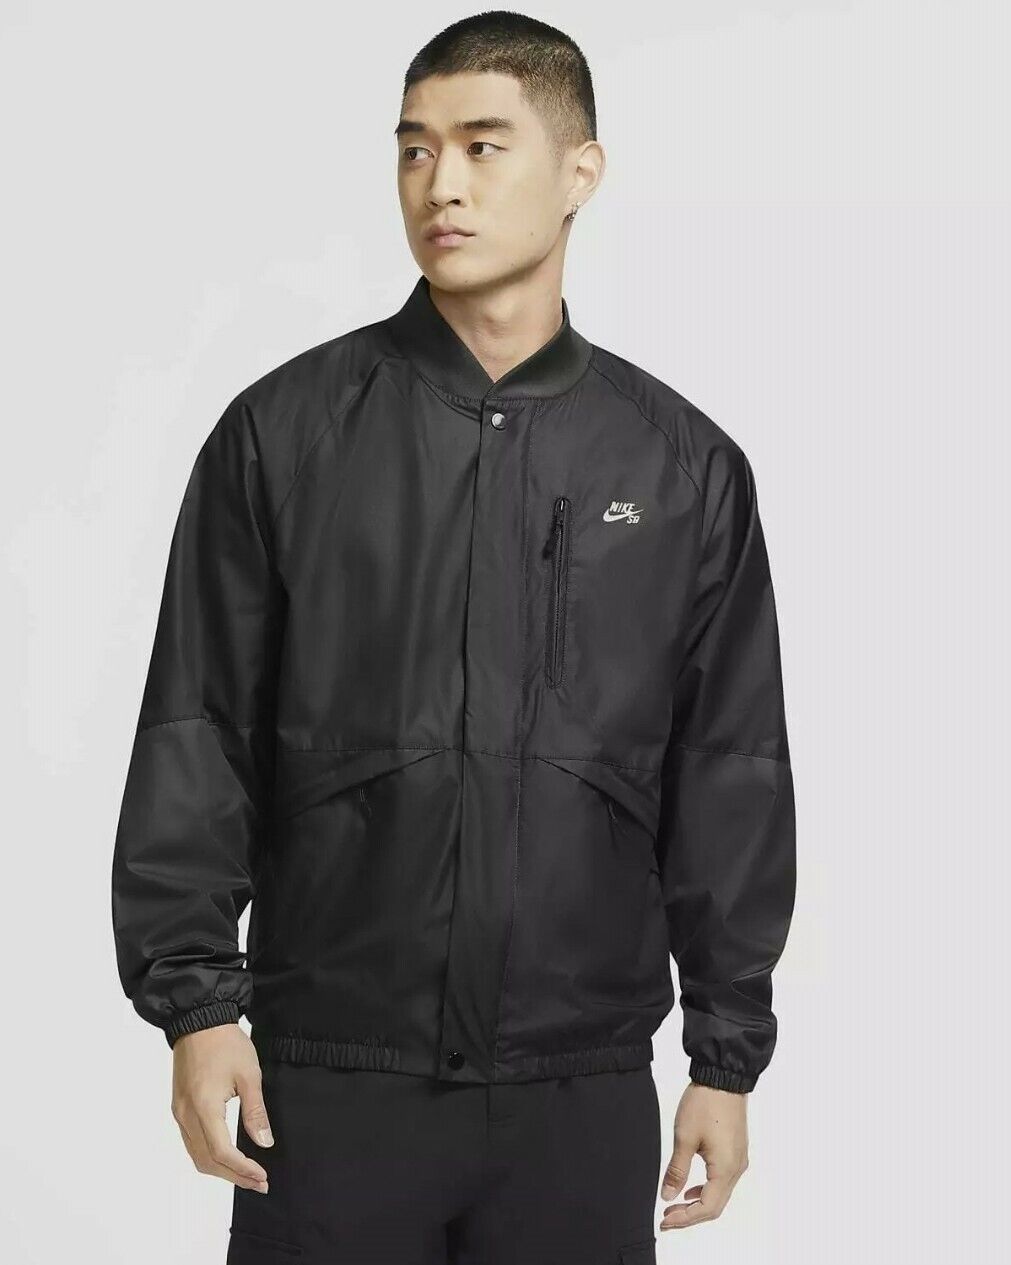 Nike SB Men's Seasonal Skate Jacket Black CK5245-011 Size S | eBay